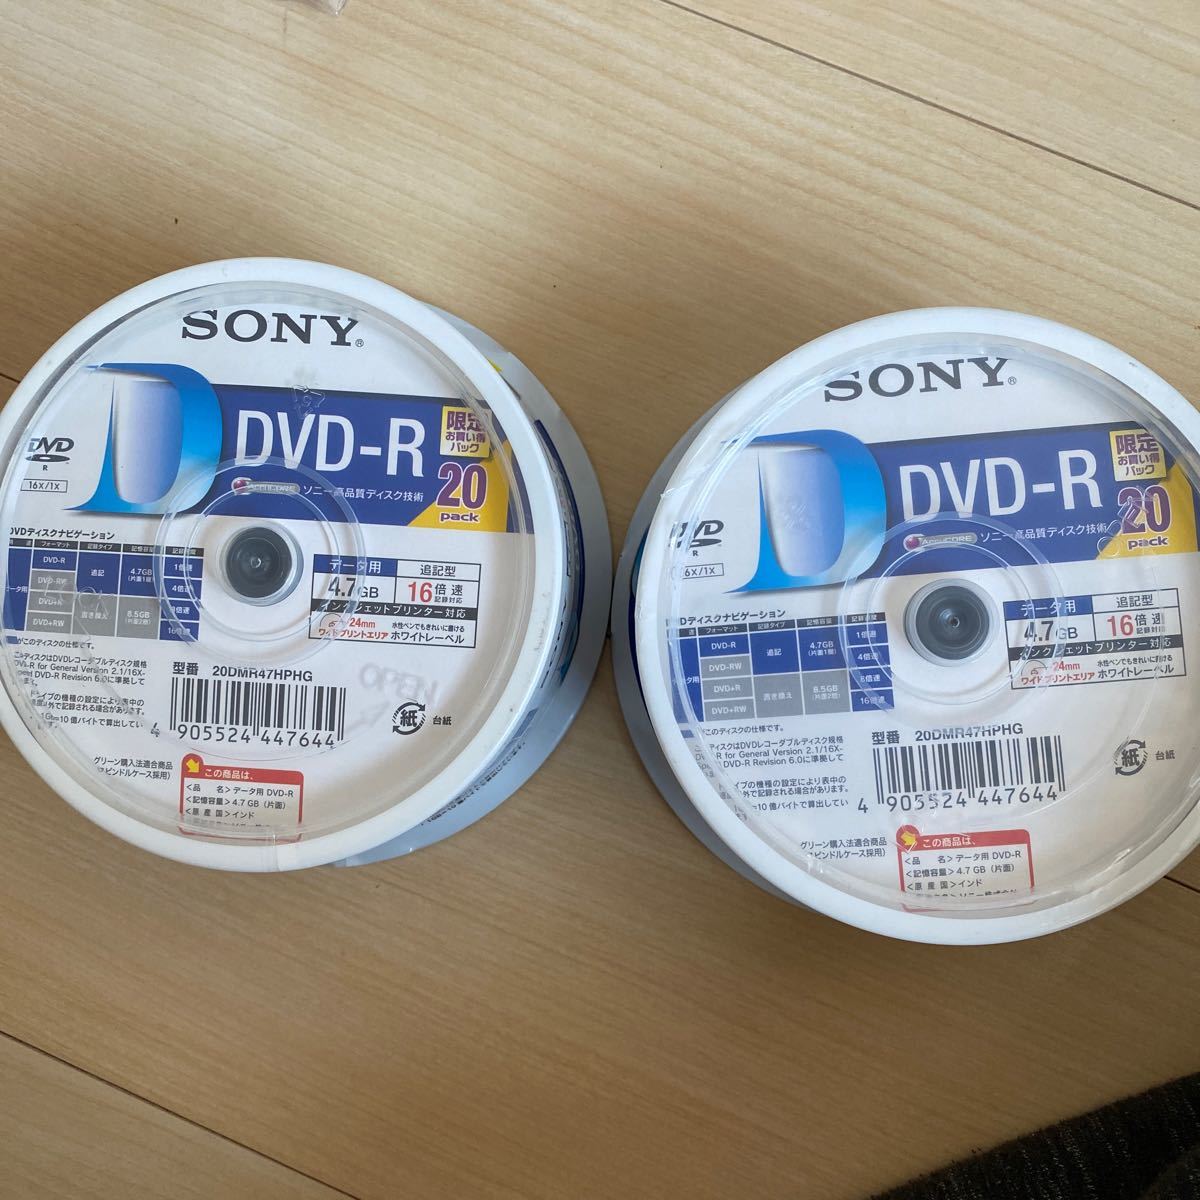 SONY DVD-R 20パック（20DMR47HPHG）